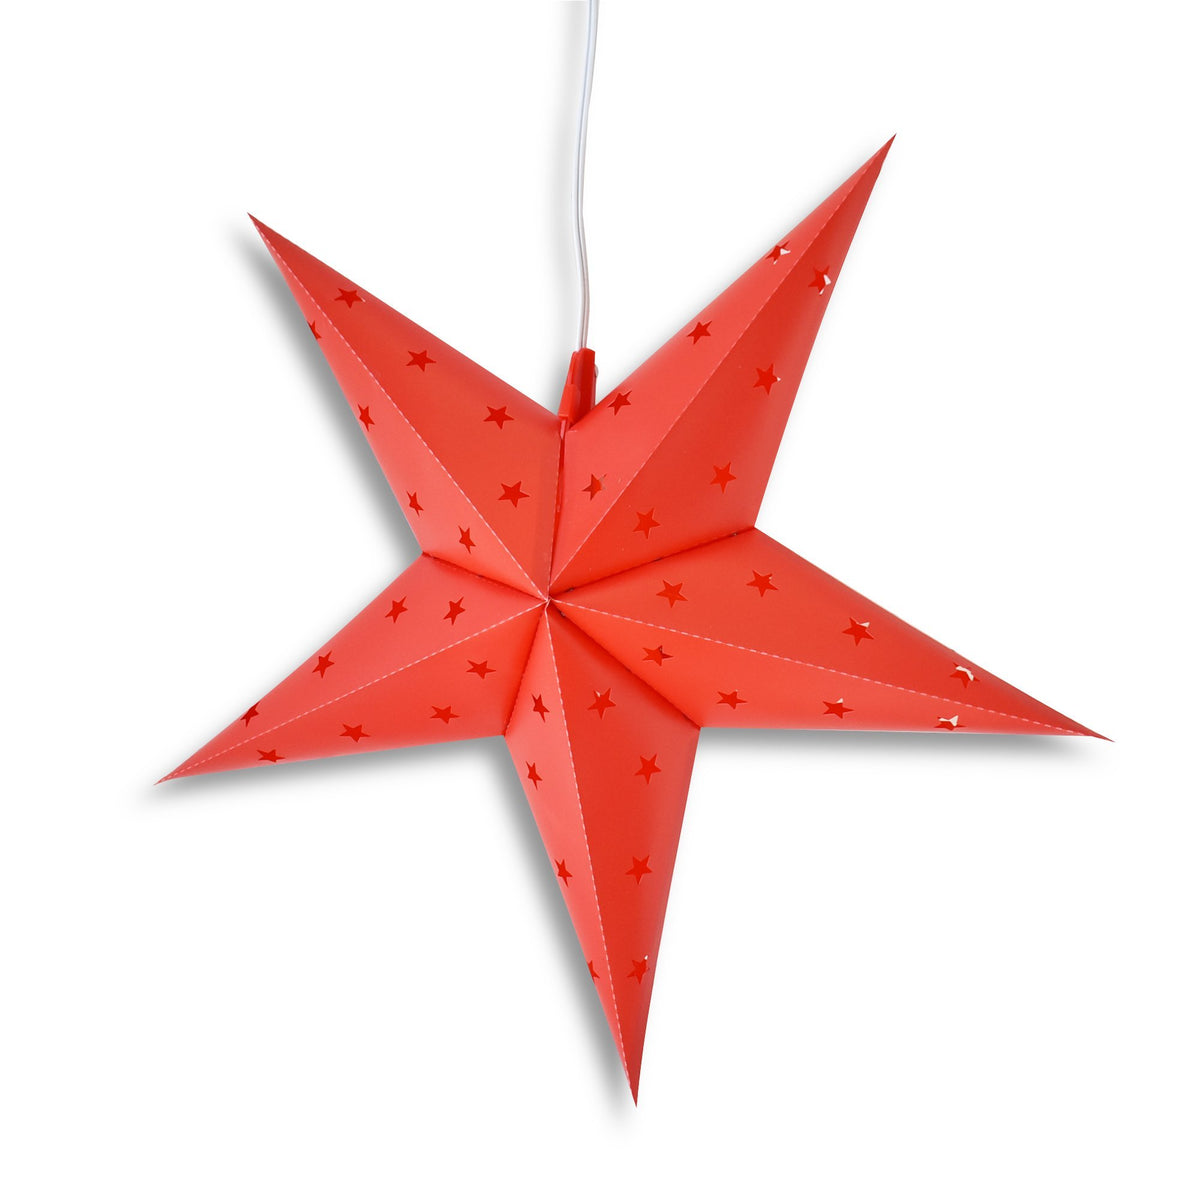 22" Red Weatherproof Star Lantern Lamp, Hanging Decoration (Shade Only)